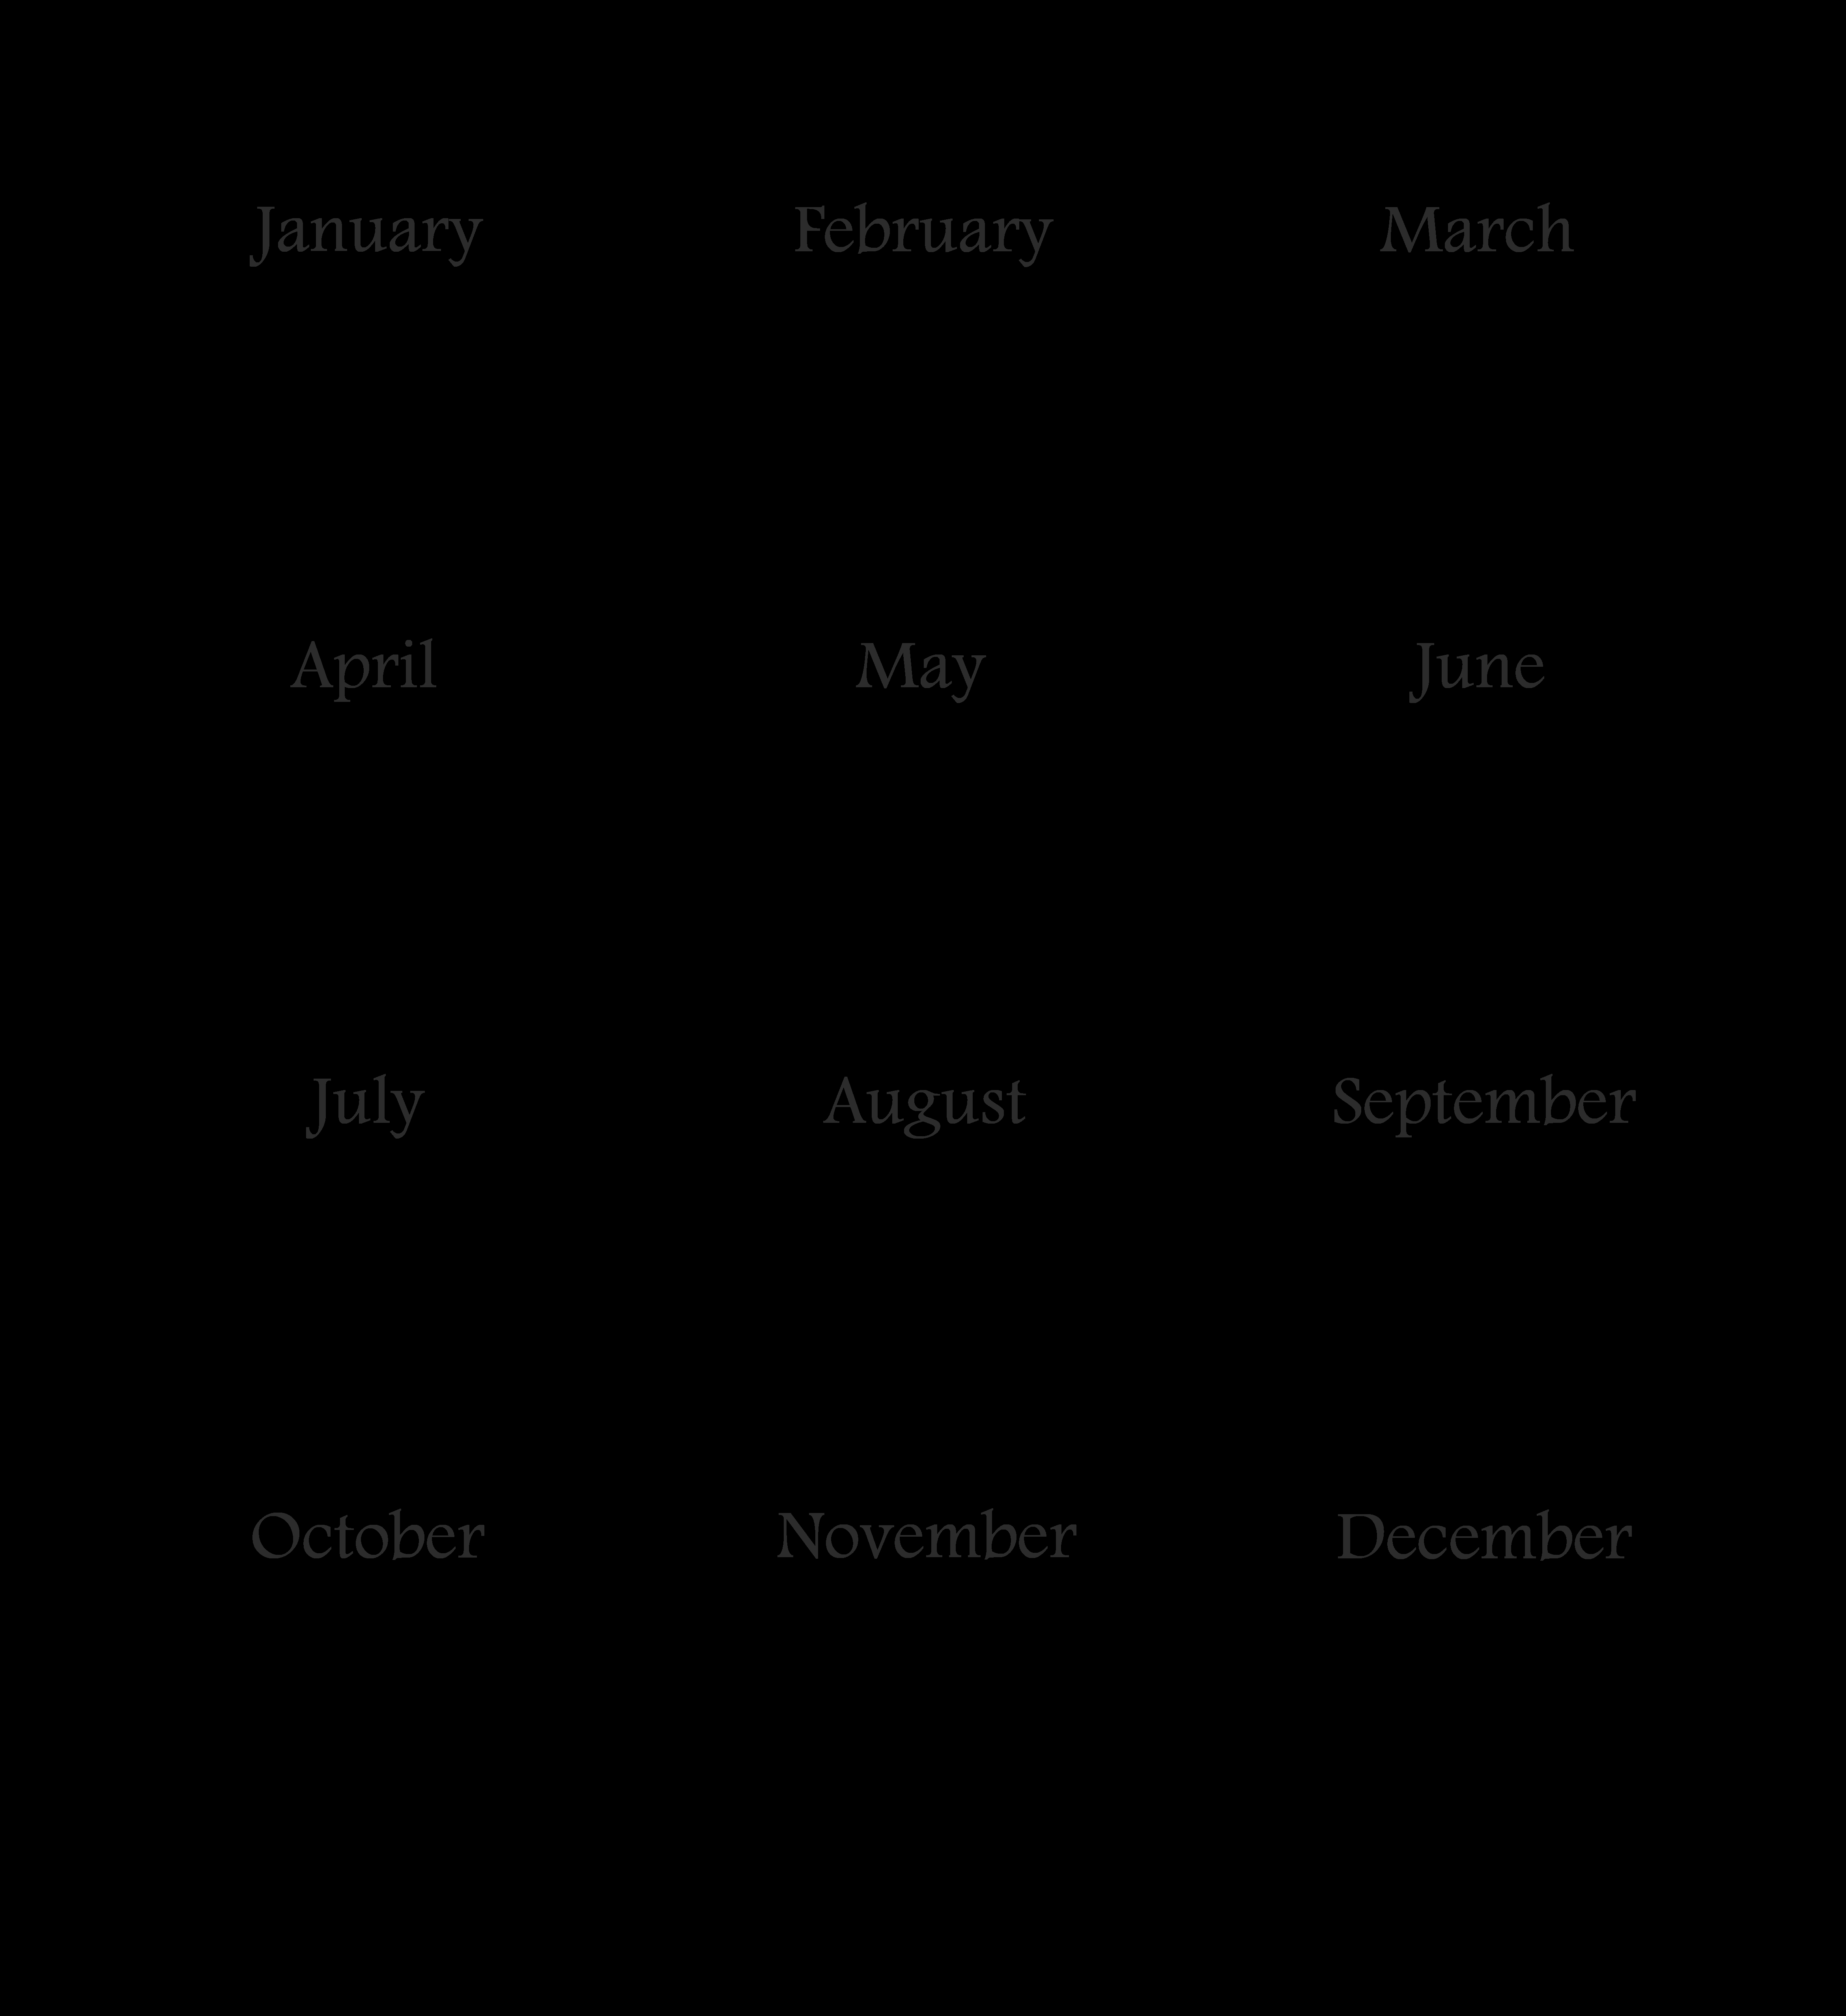 Free 2015 Yearly Calendar Template Unique Find Calendar